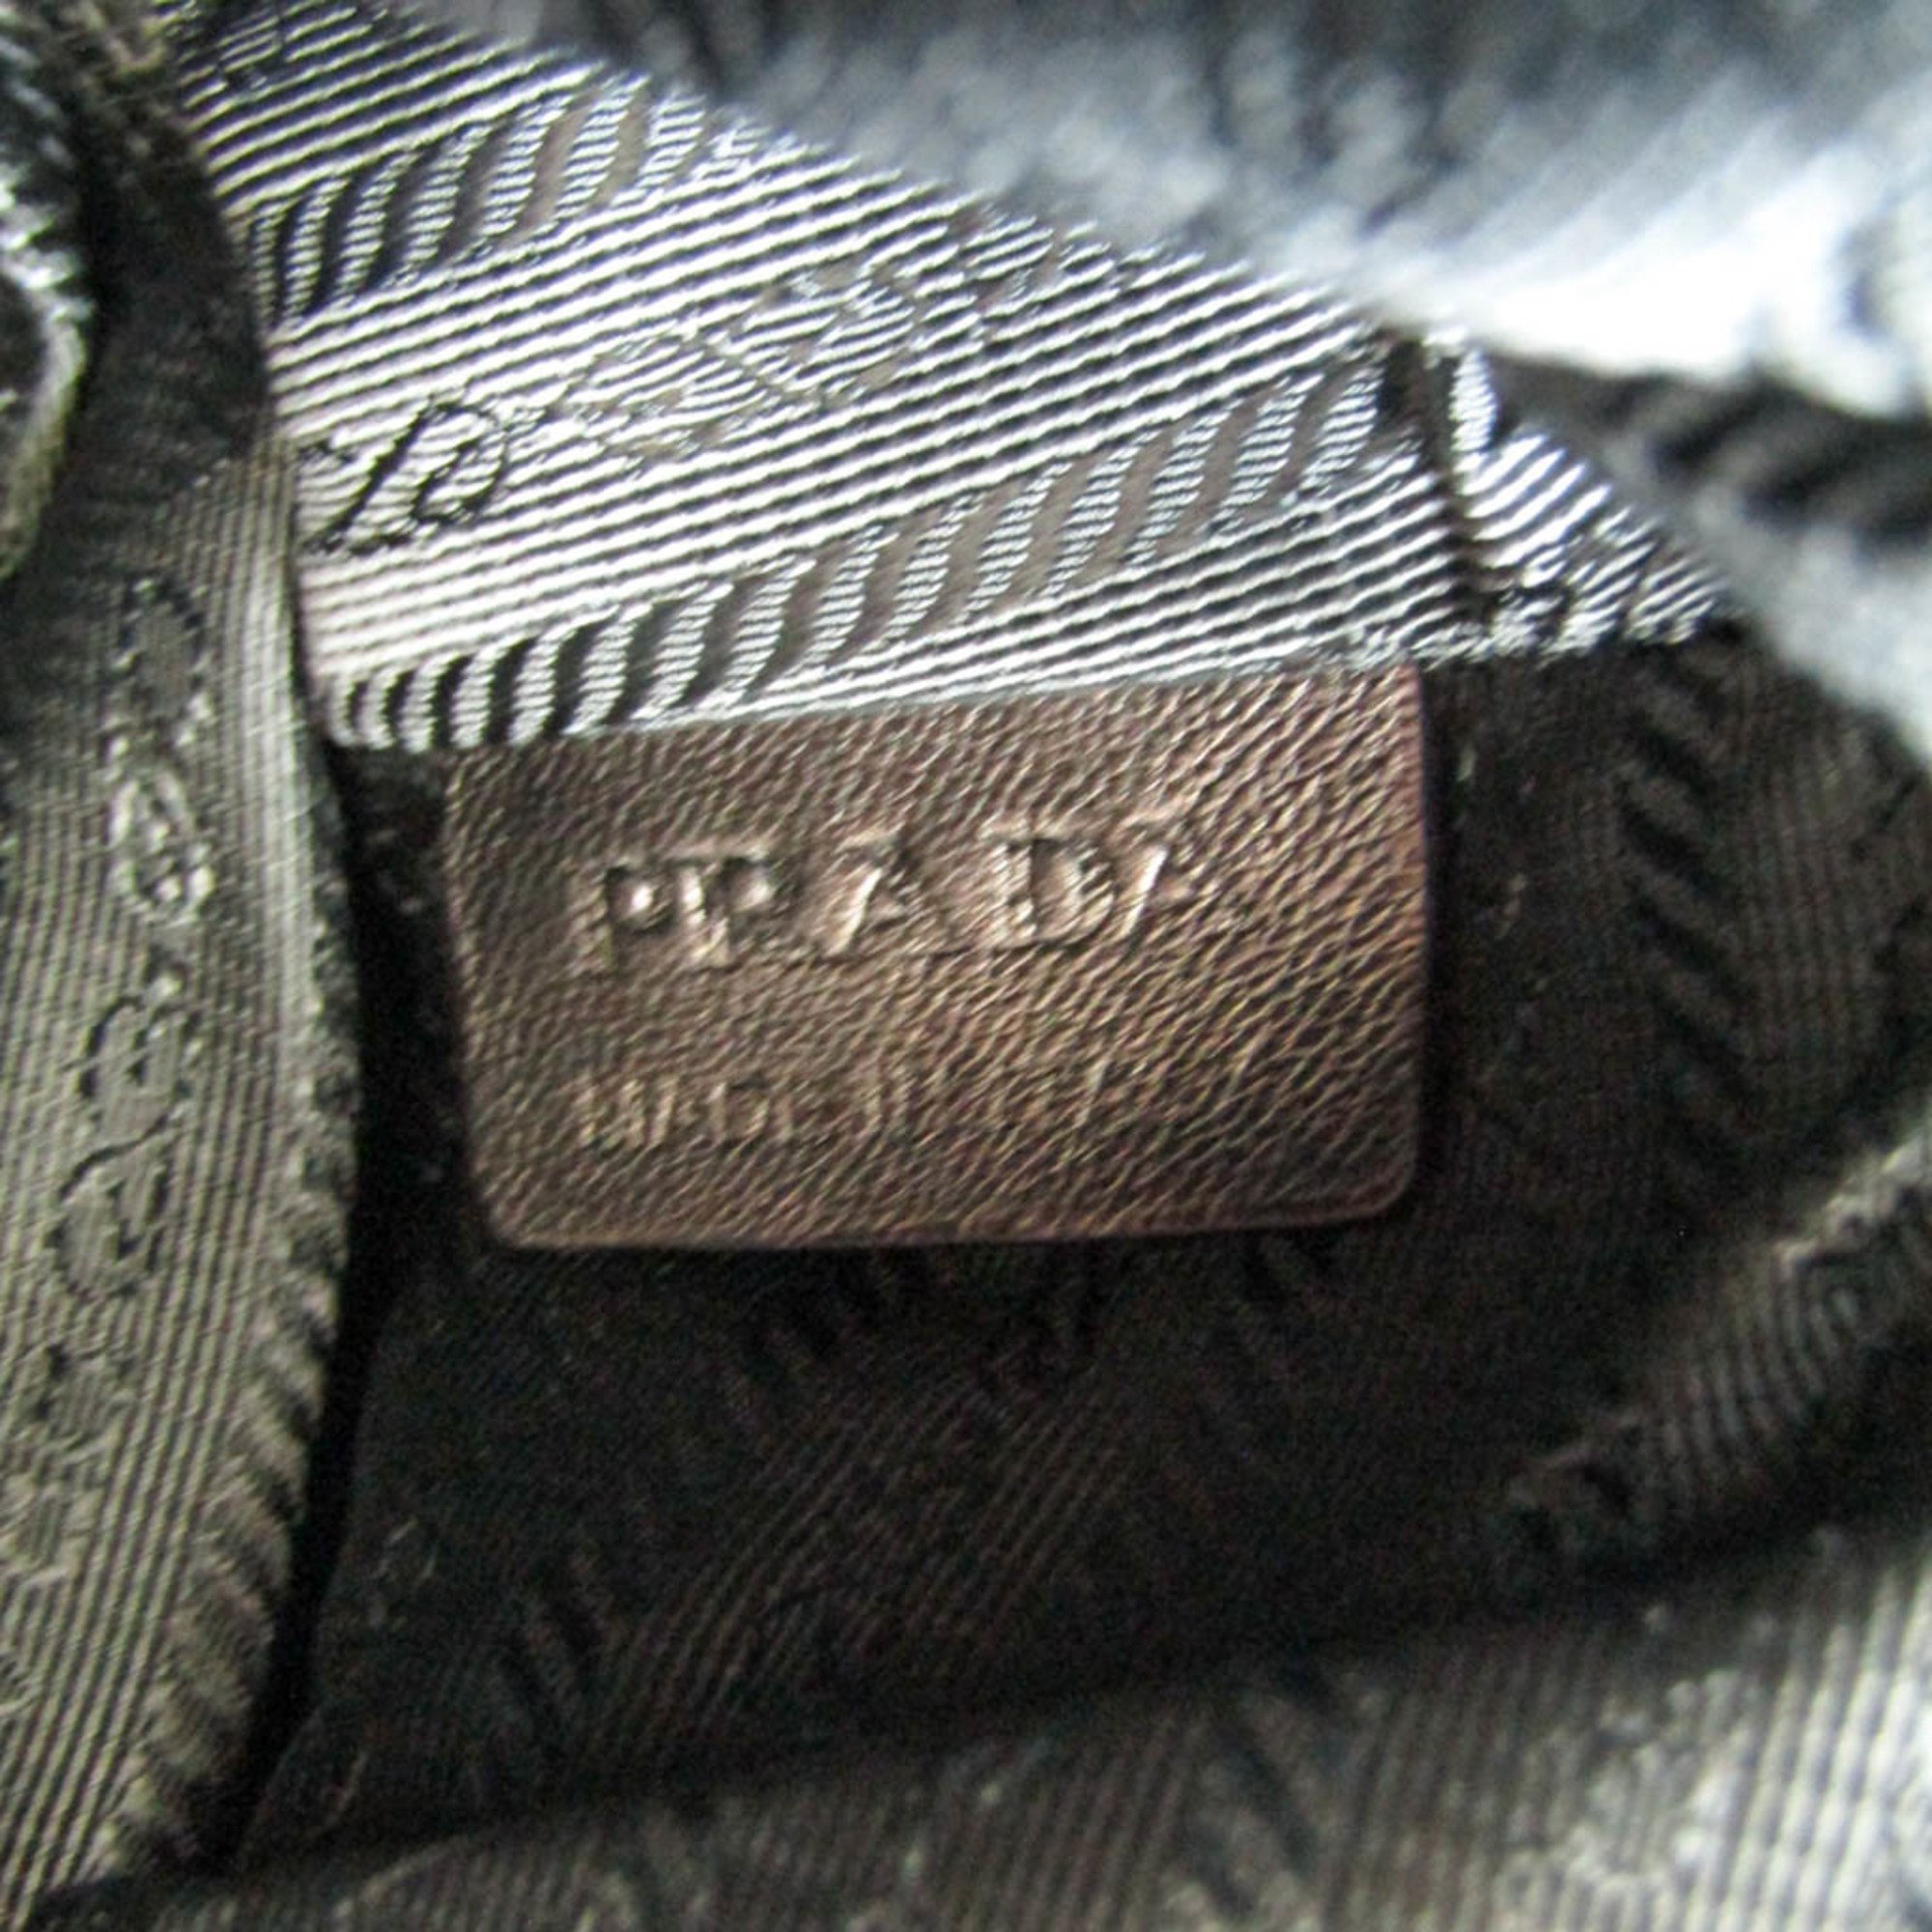 Prada BR4007 Women's Tessuto,Leather Tote Bag Bronze,Gray